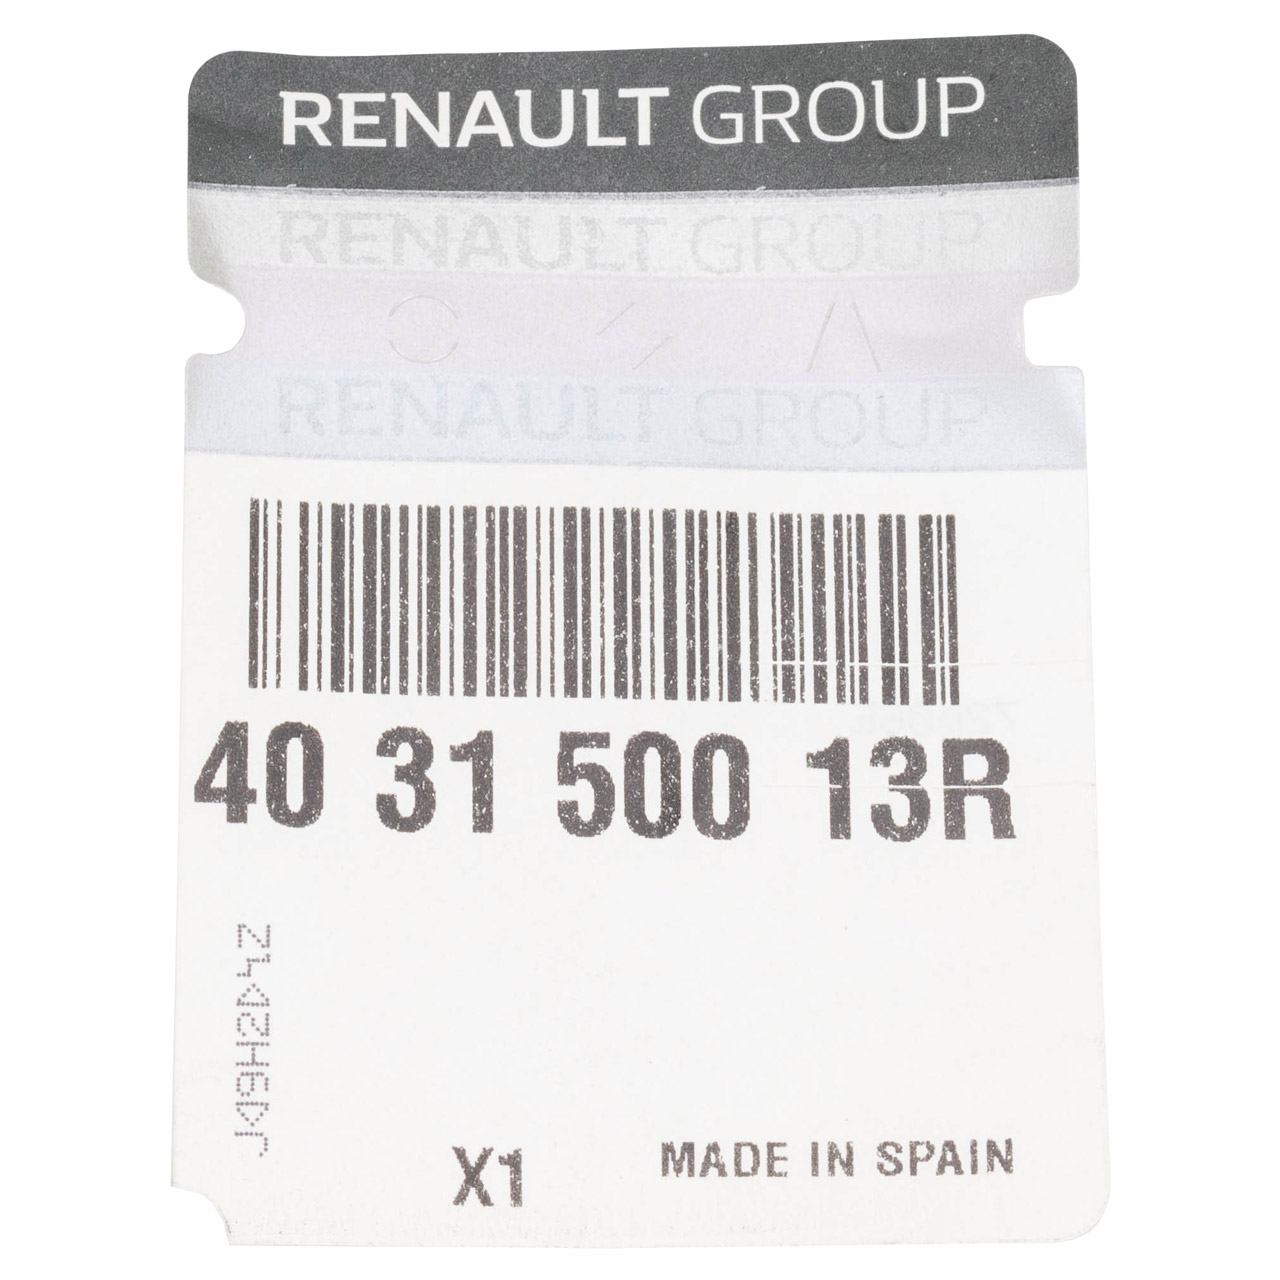 1x ORIGINAL Renault Radkappe Radblende 16 Zoll Silber Megane 3 Scenic 3 403150013R